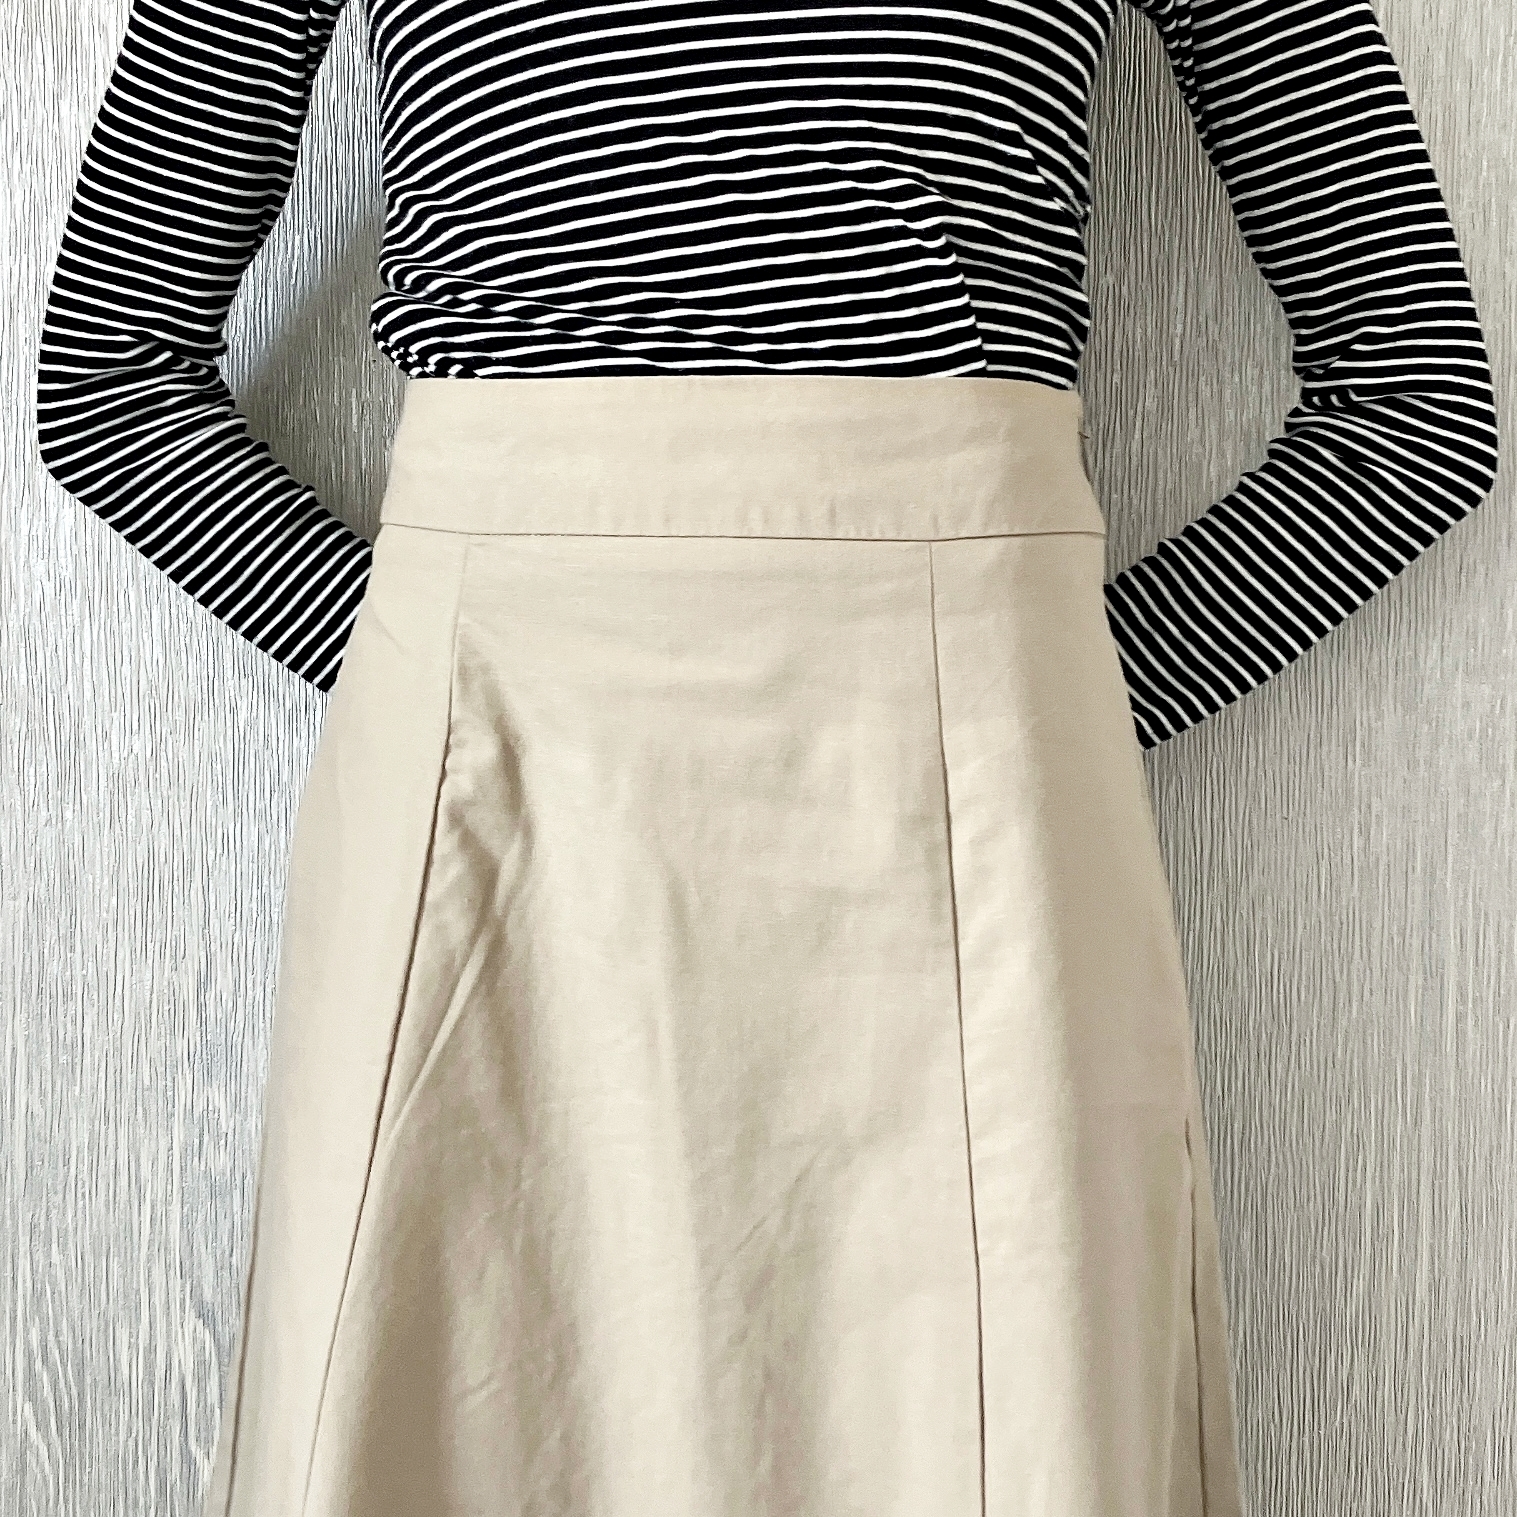 GU（ジーユー）のおすすめスカート「リネンブレンドフレアロングスカート（丈標準85.0～92.0cm）」